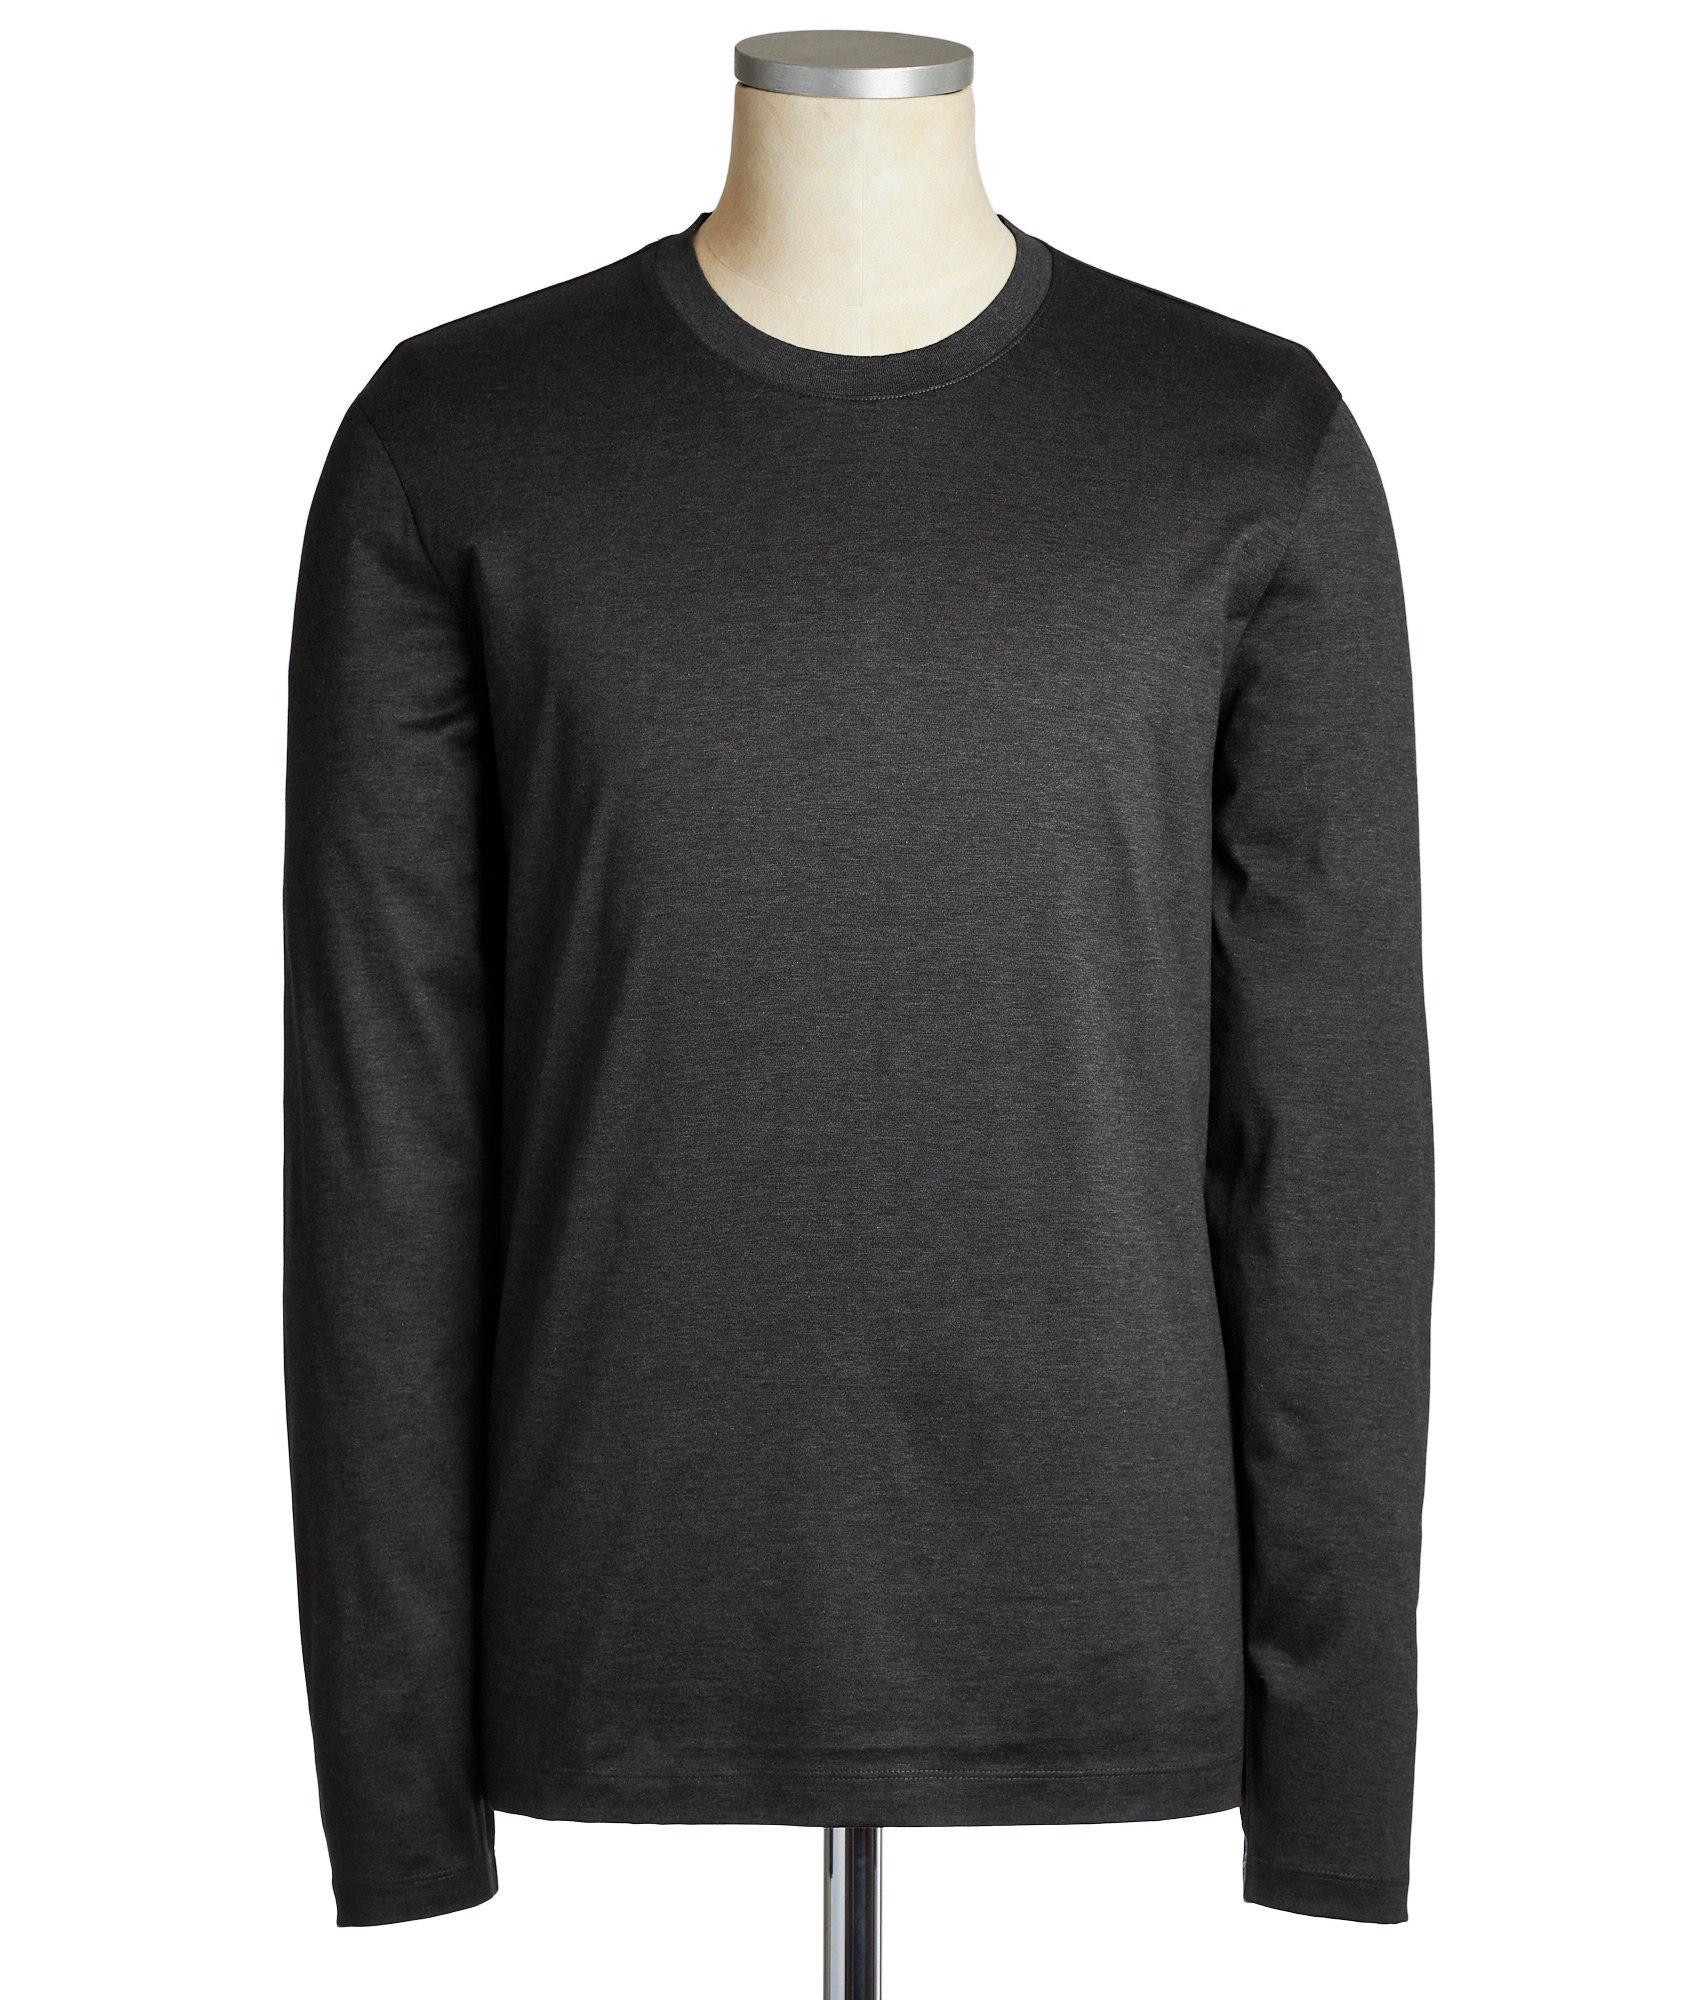 Long-Sleeve Cotton T-Shirt image 0